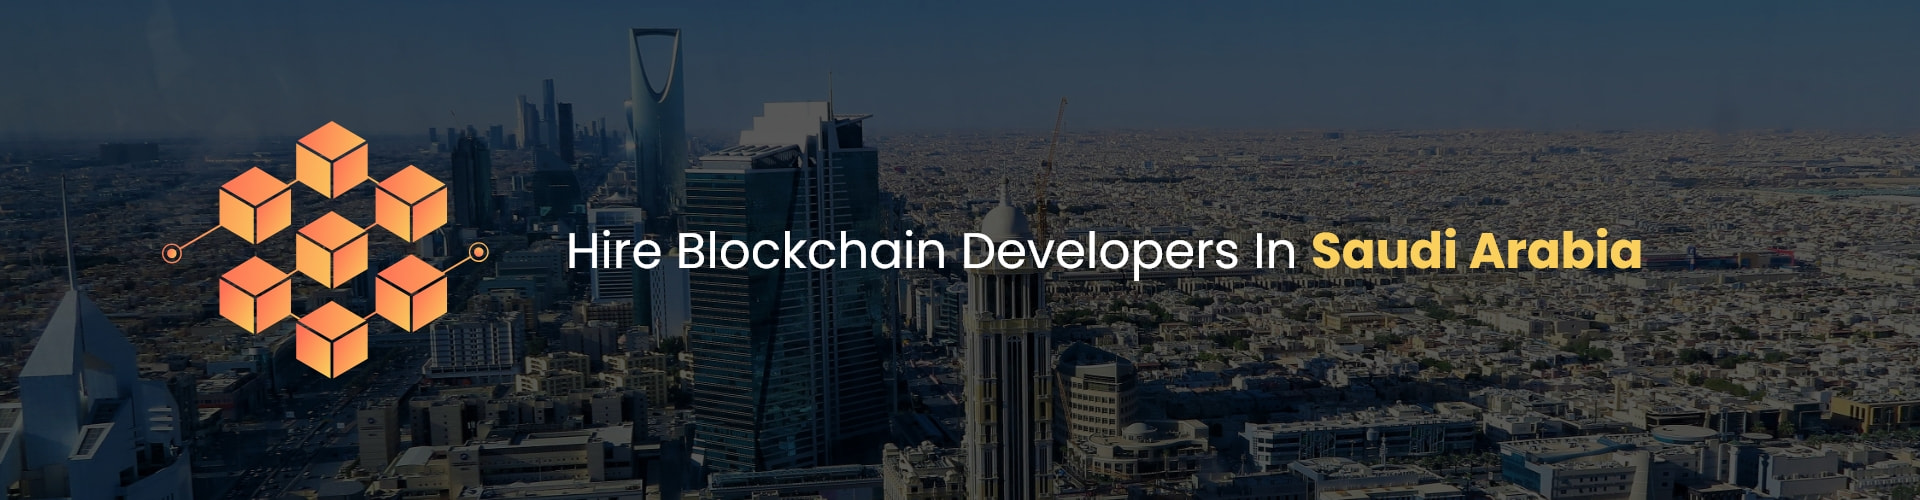 hire blockchain developers in saudi arabia